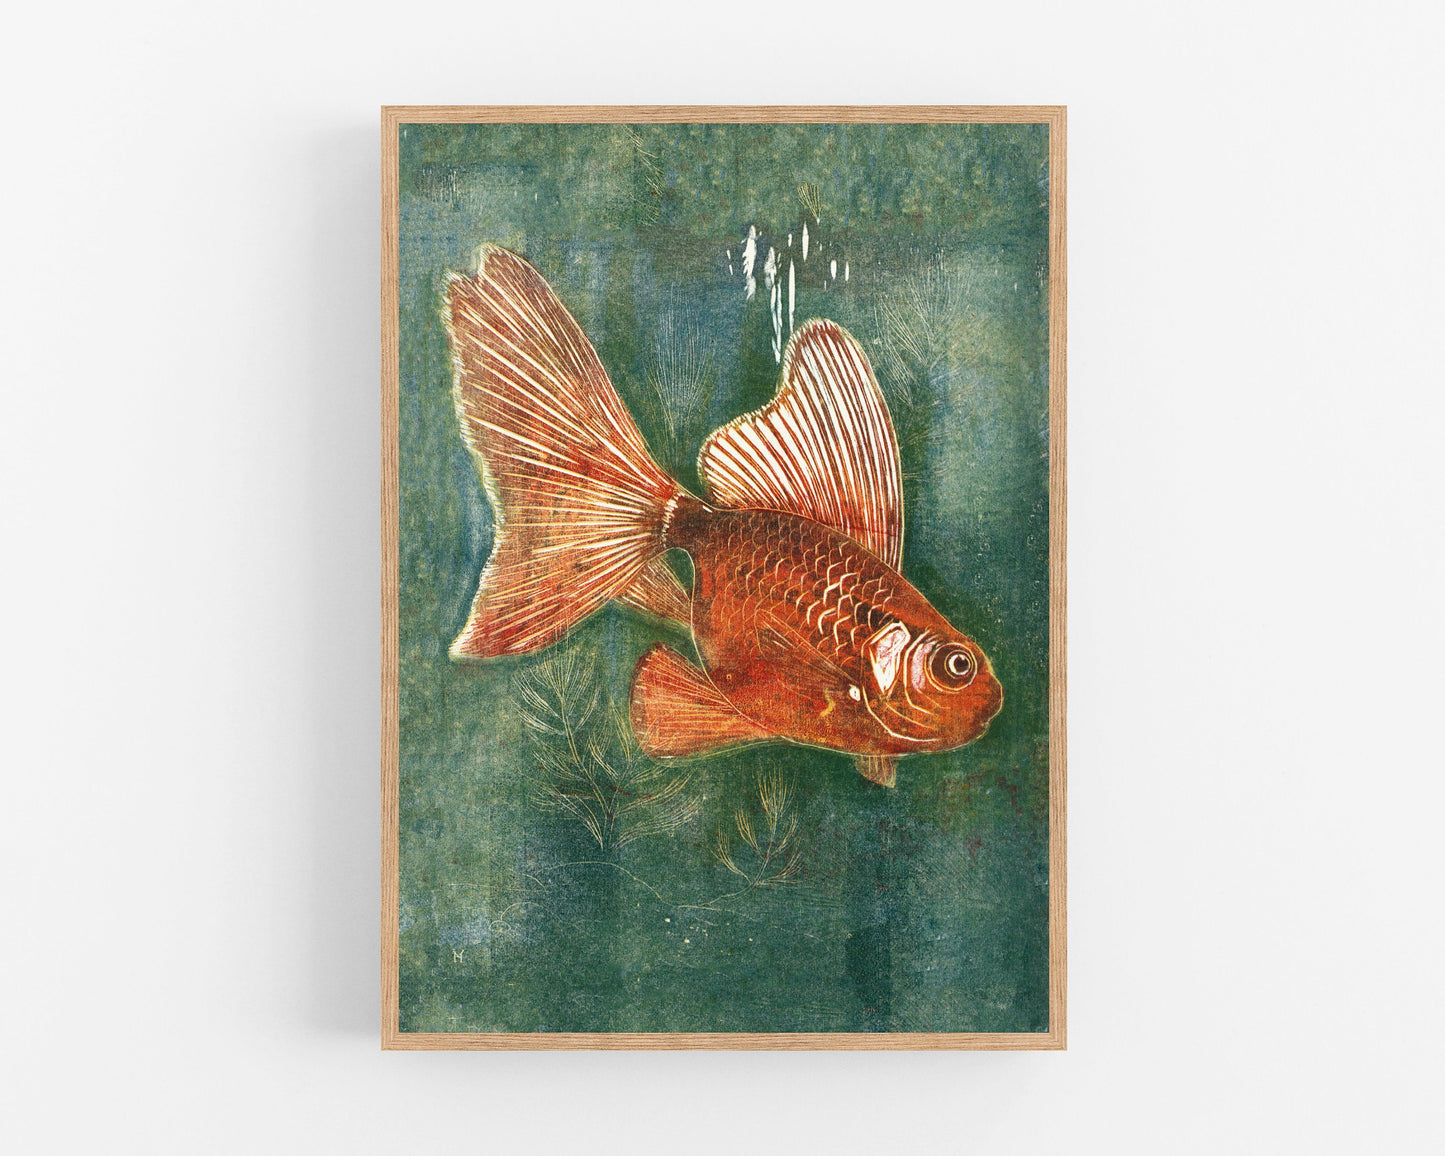 Vintage Veil Tale fish | Goldfish and aquarium wall decor | Color woodcut print | Art deco art | Giclée fine art print | Eco-friendly gift